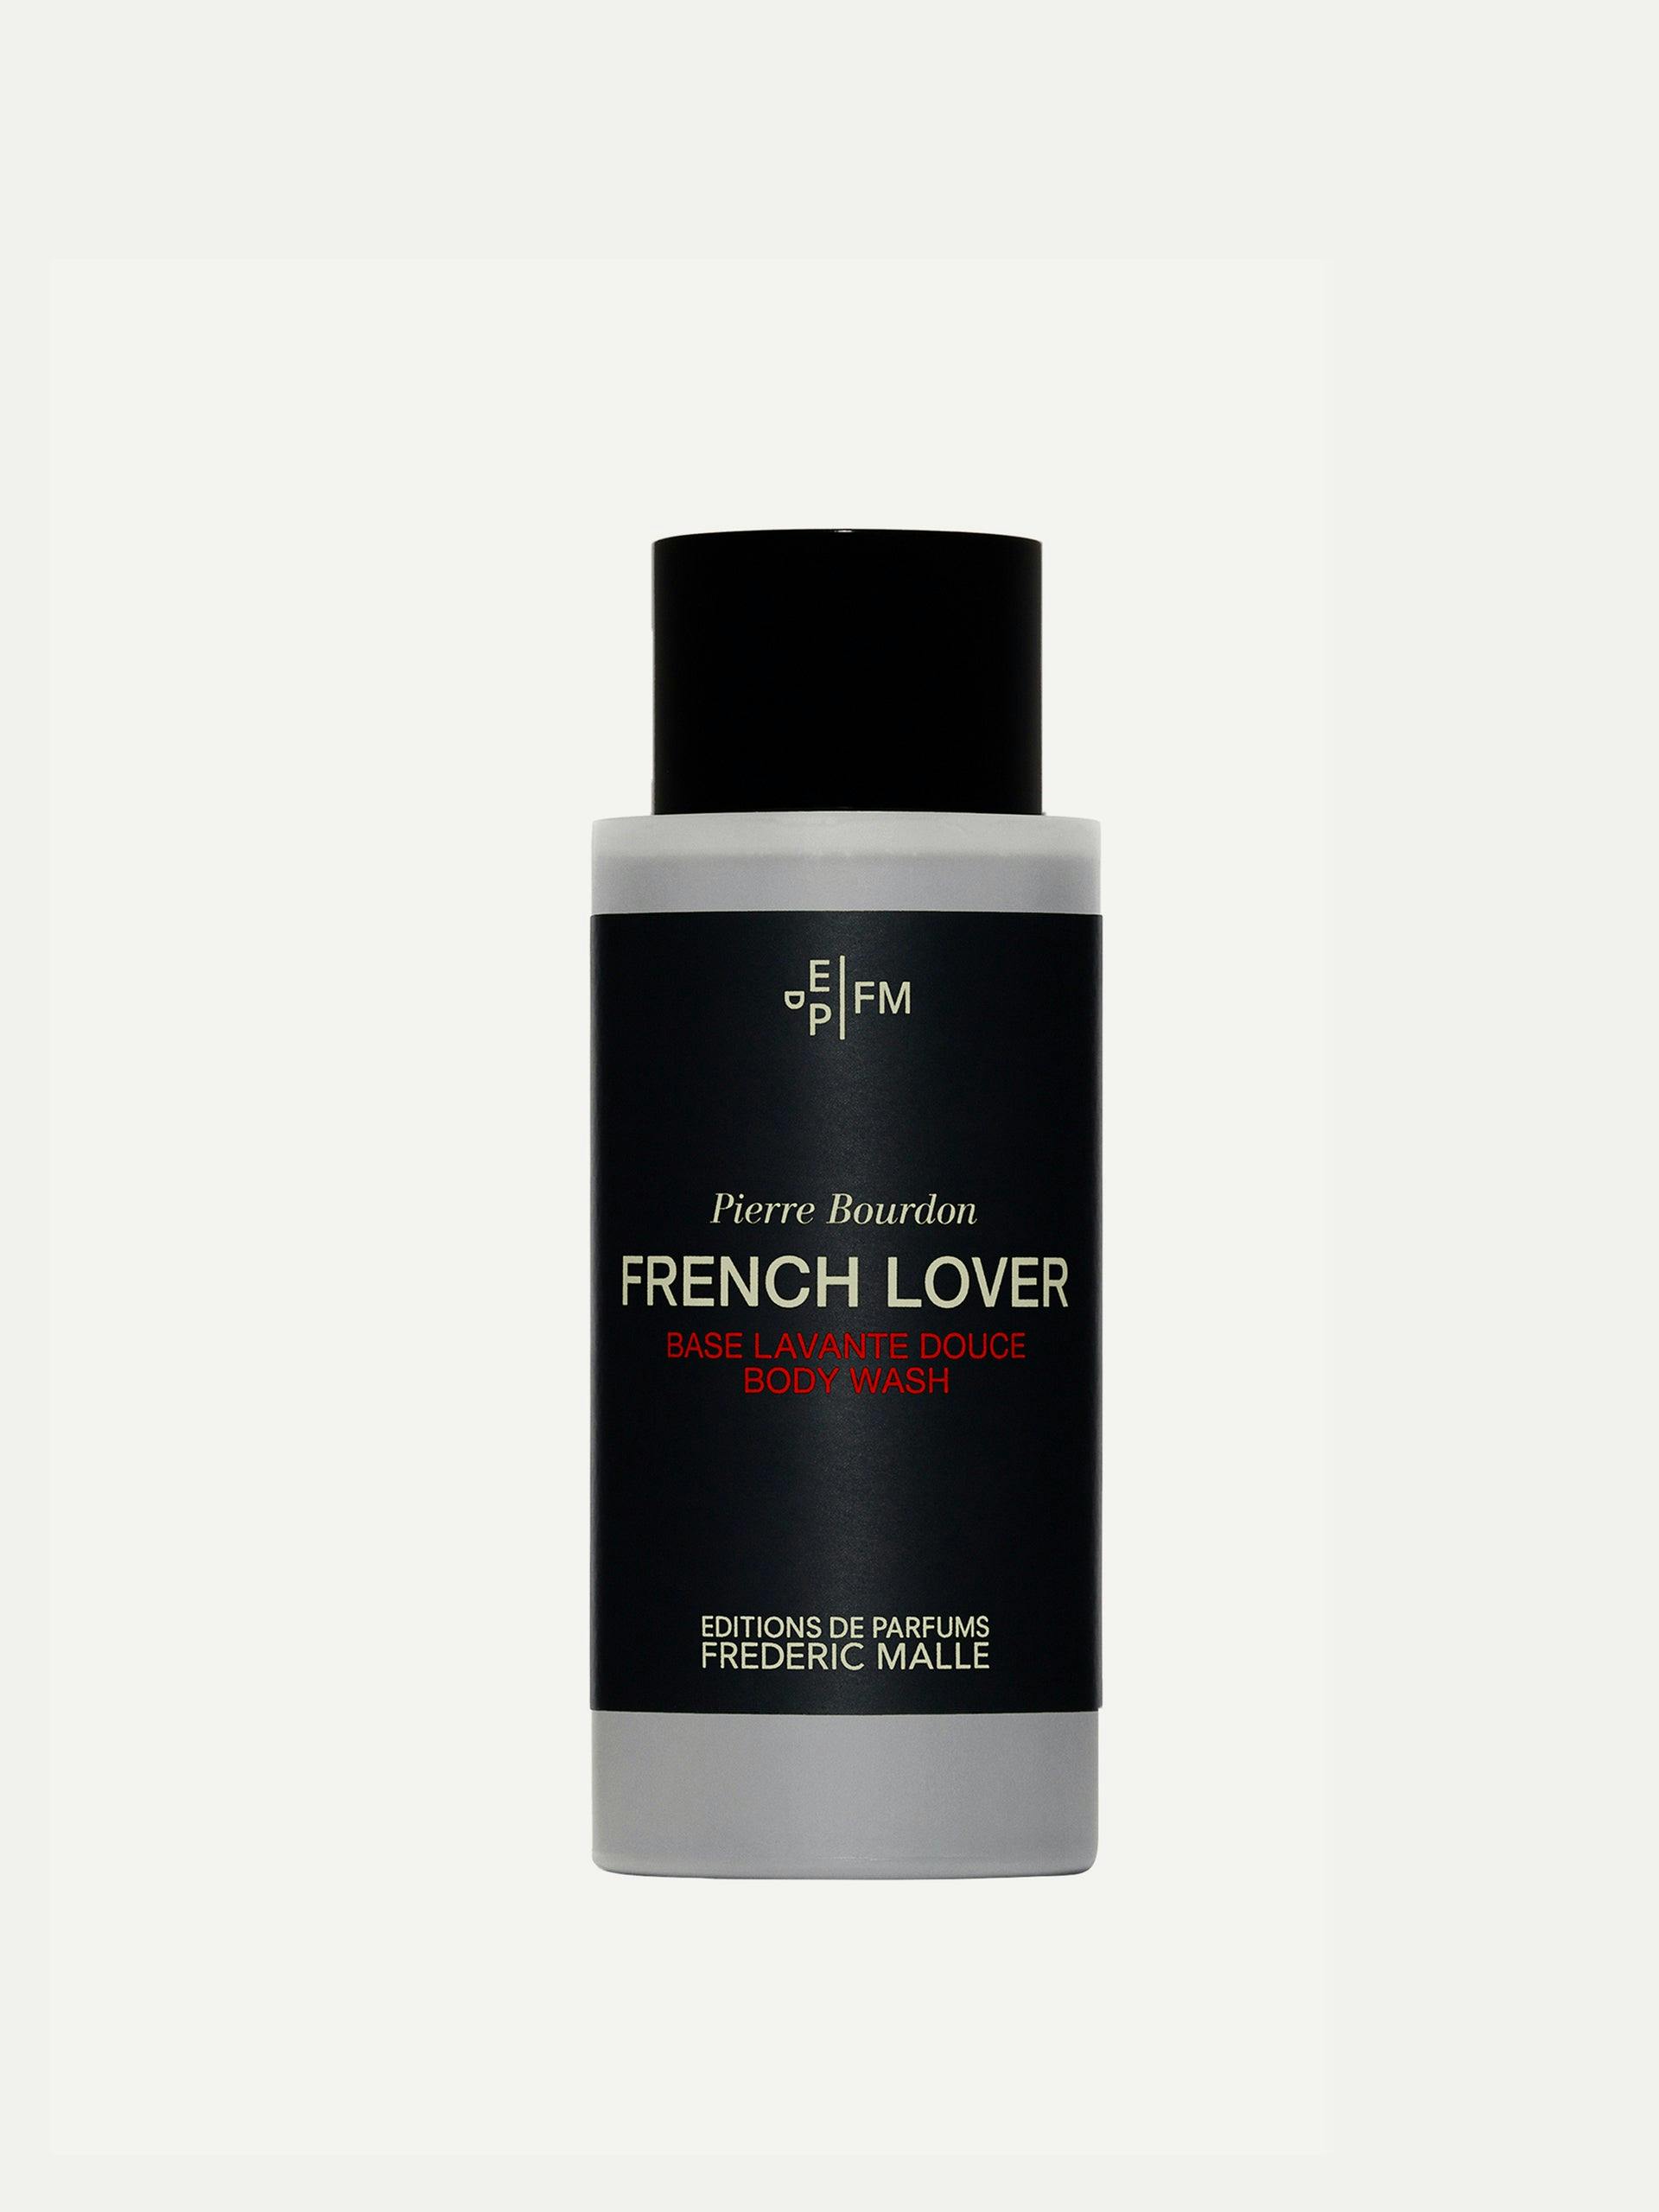 French Lover body wash